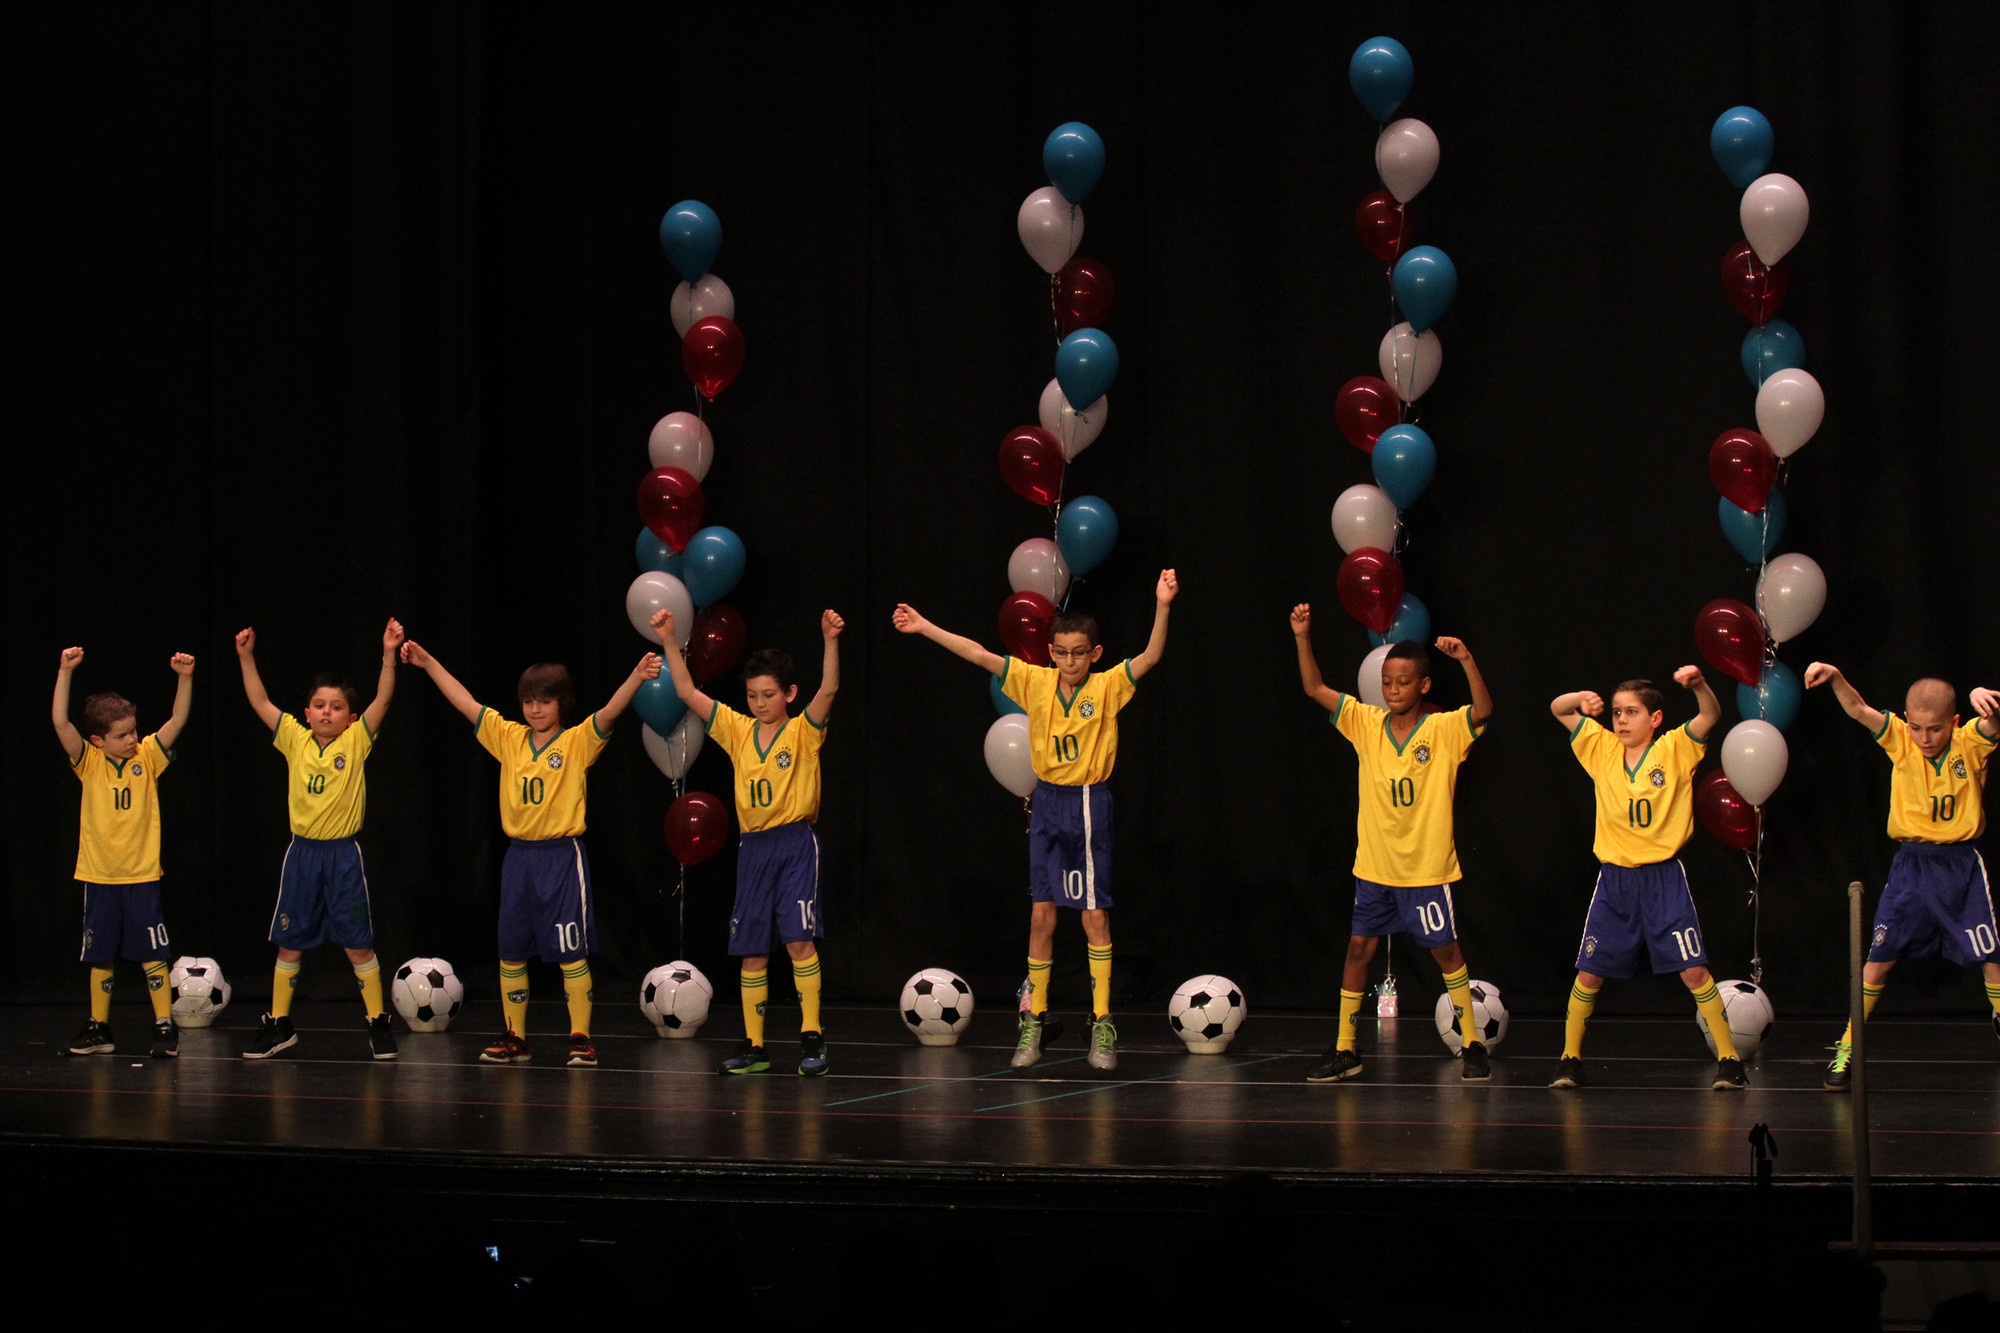 The boys showed their team spirit while dancing to “Copa de la Vida.”